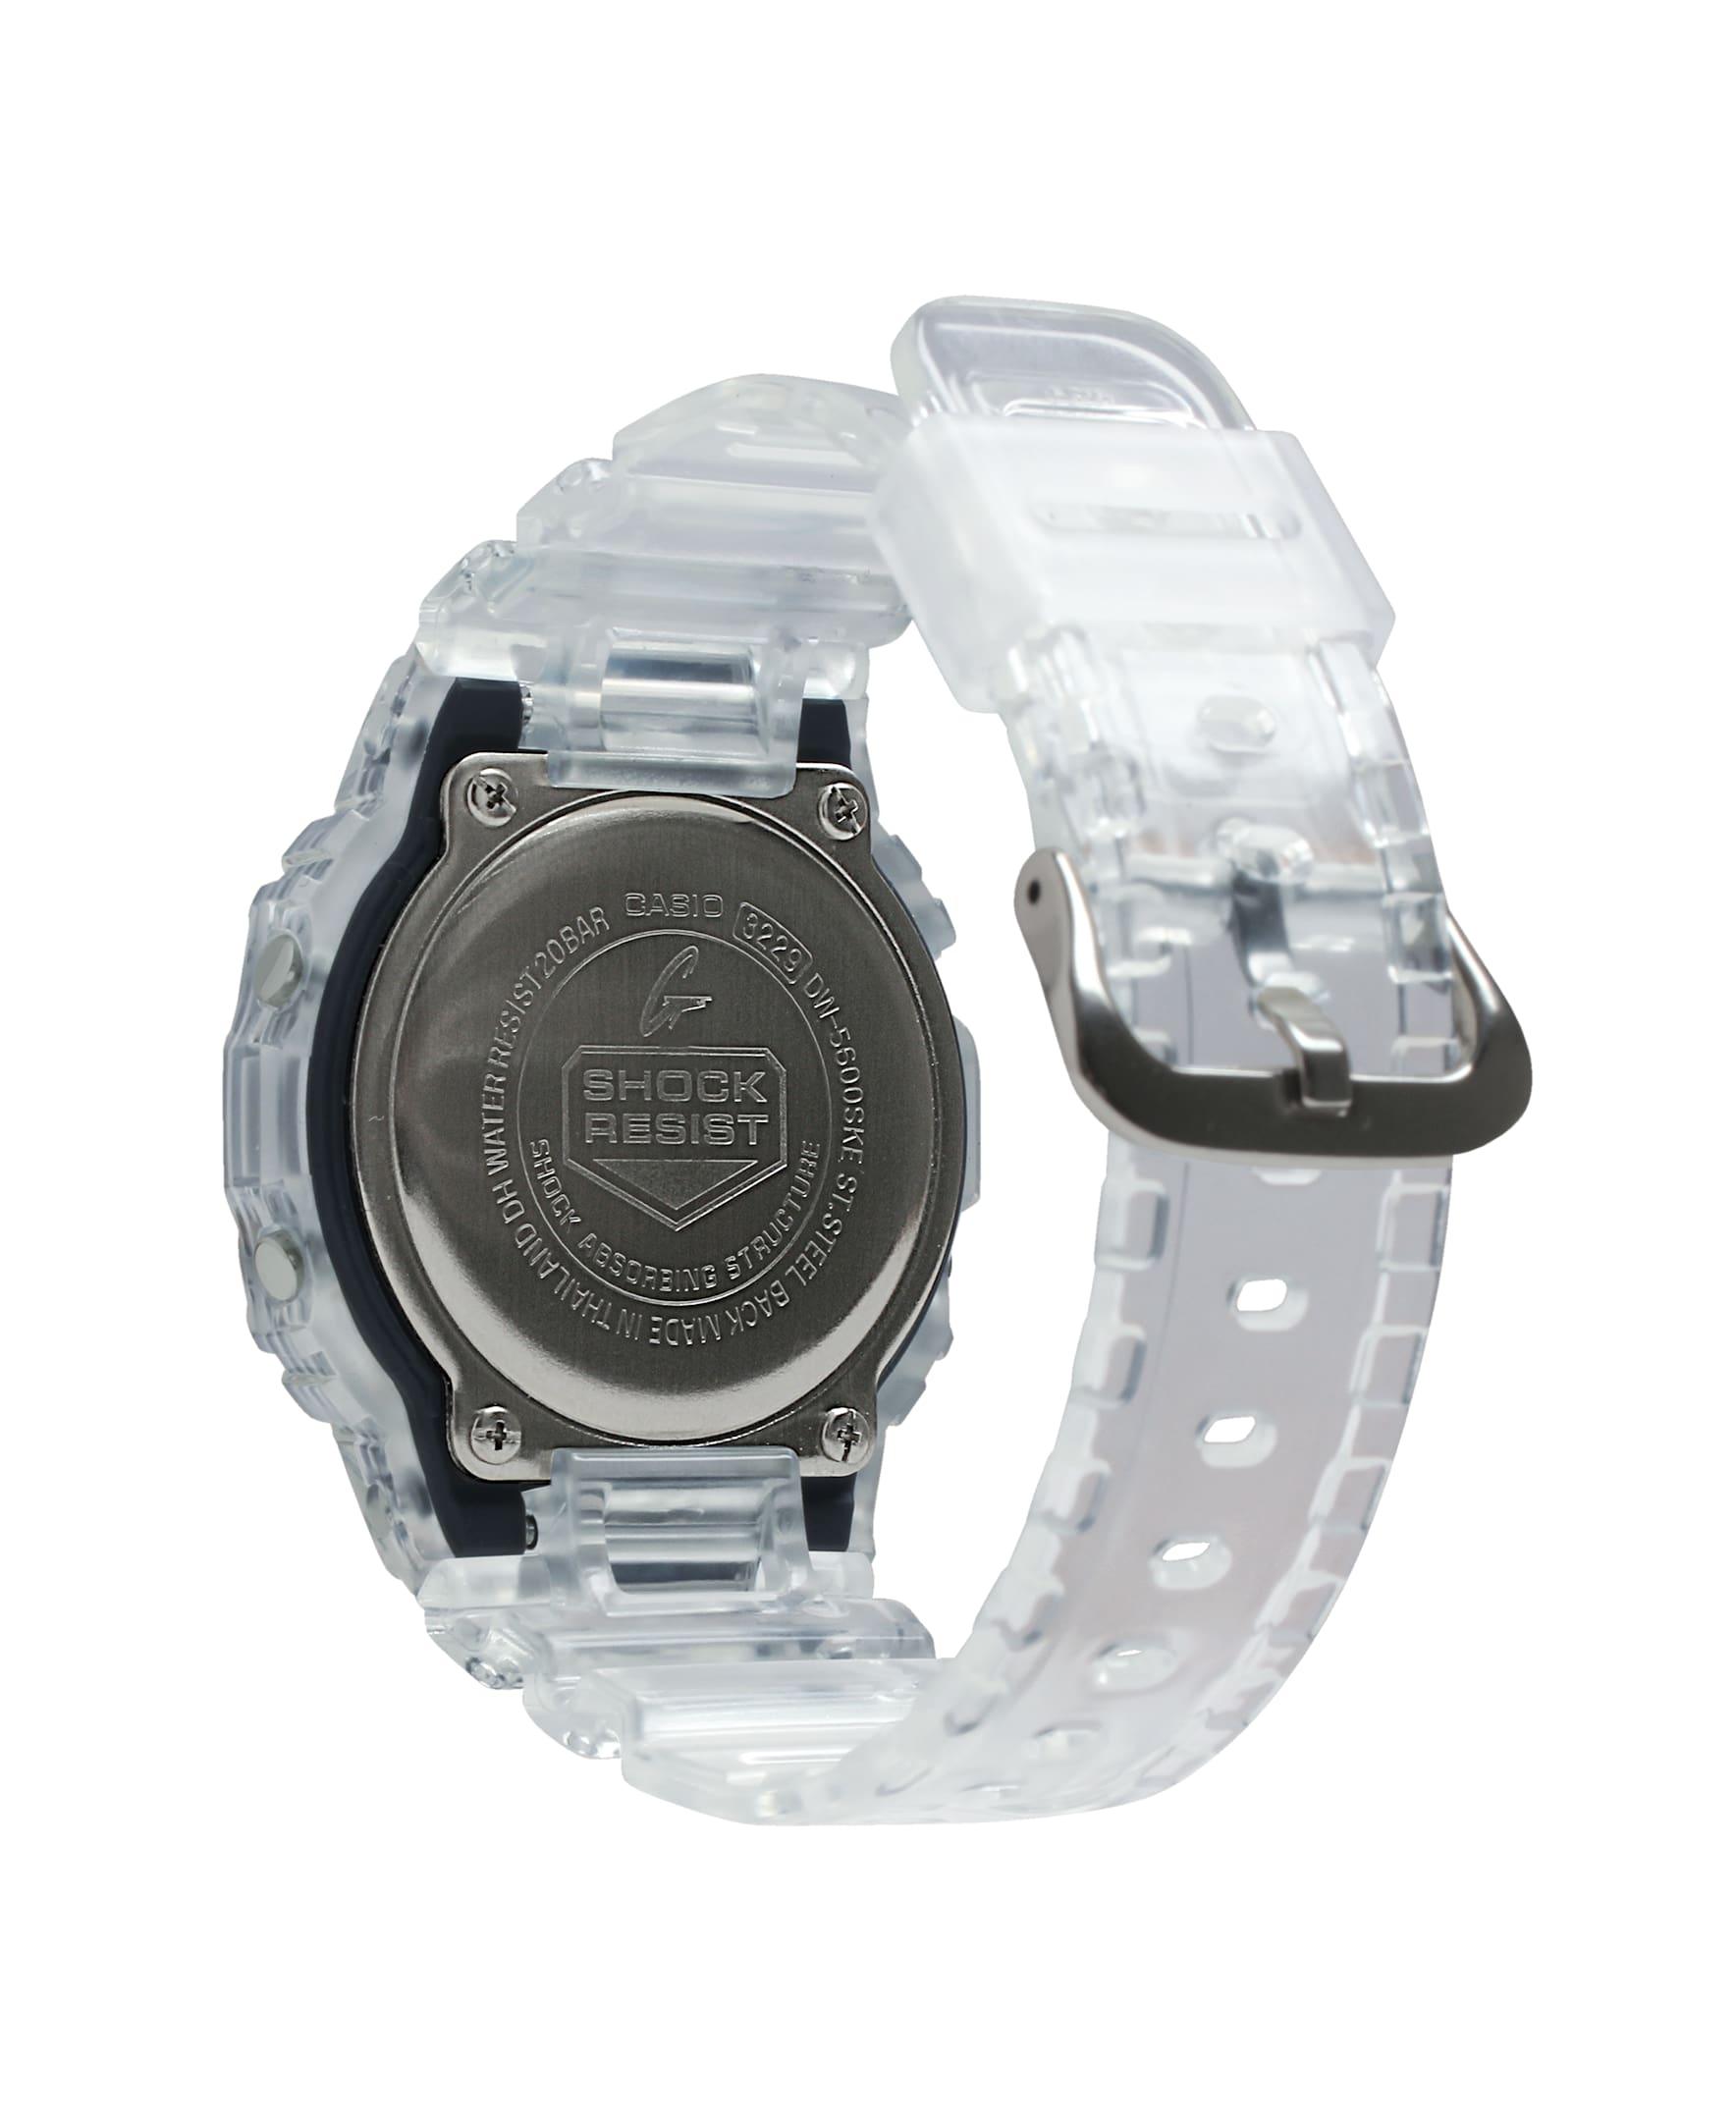 Digital 5600 Series DW5600SKE-7 Watch - Transparent - Purpose-Built / Home of the Trades